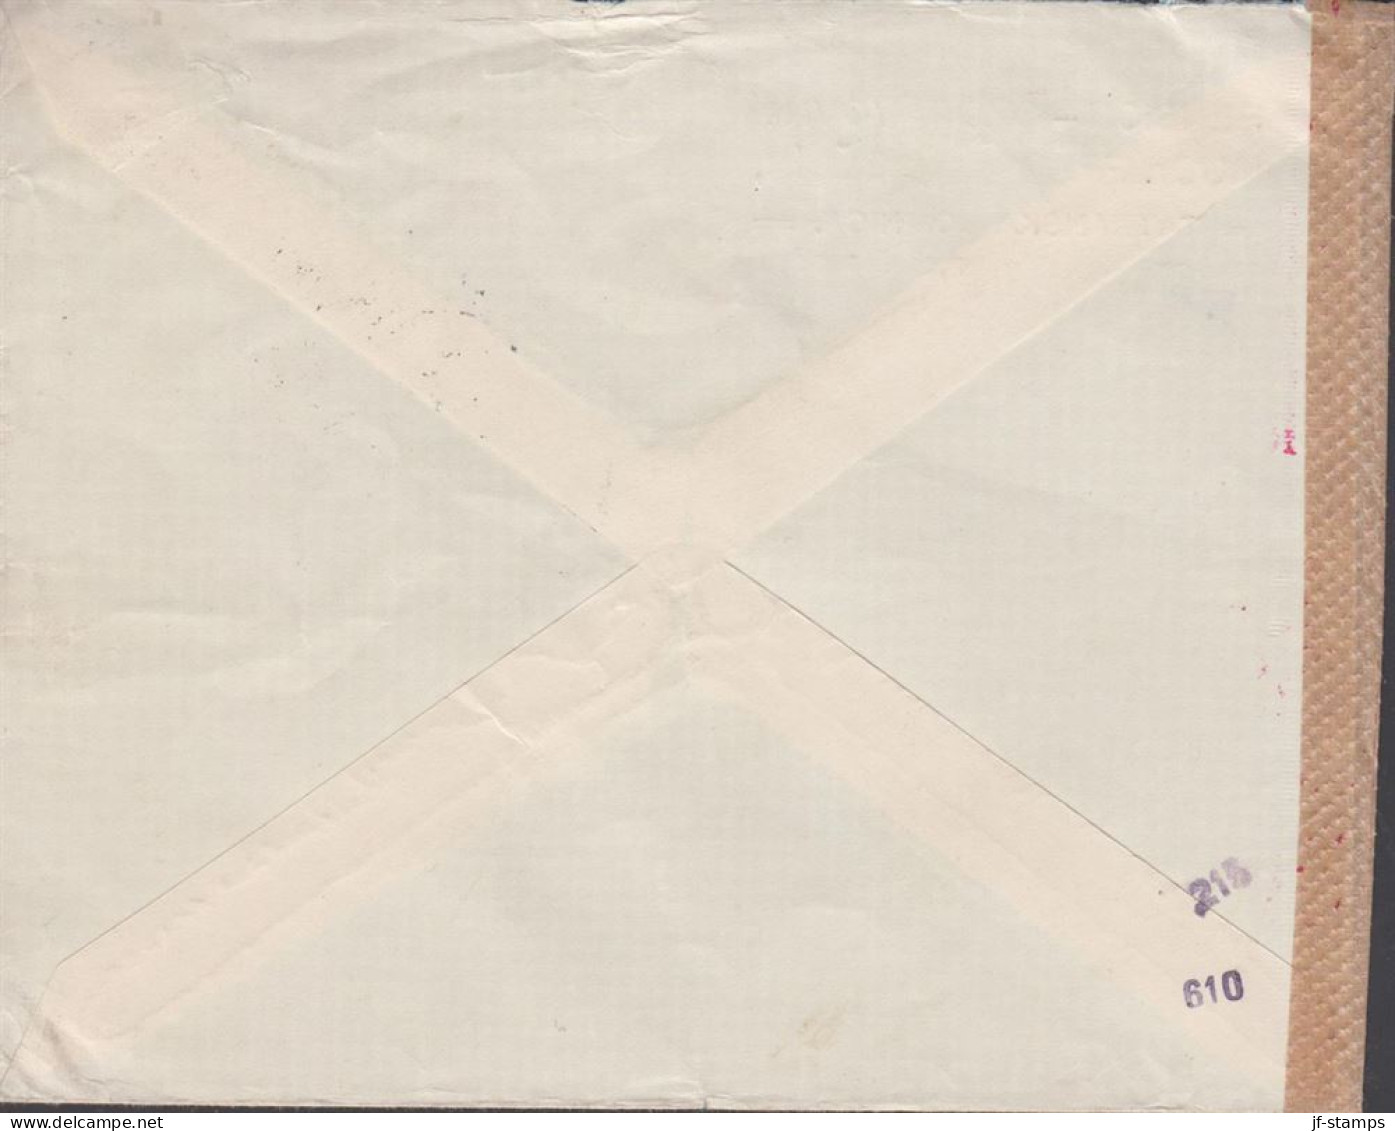 1942. SLOVENSKO 70 H Tito + 1,30 KORUNA Hlinka On Censored Cover To Prag Cancelled TATRANSKA ... (Michel 97+) - JF441425 - Covers & Documents